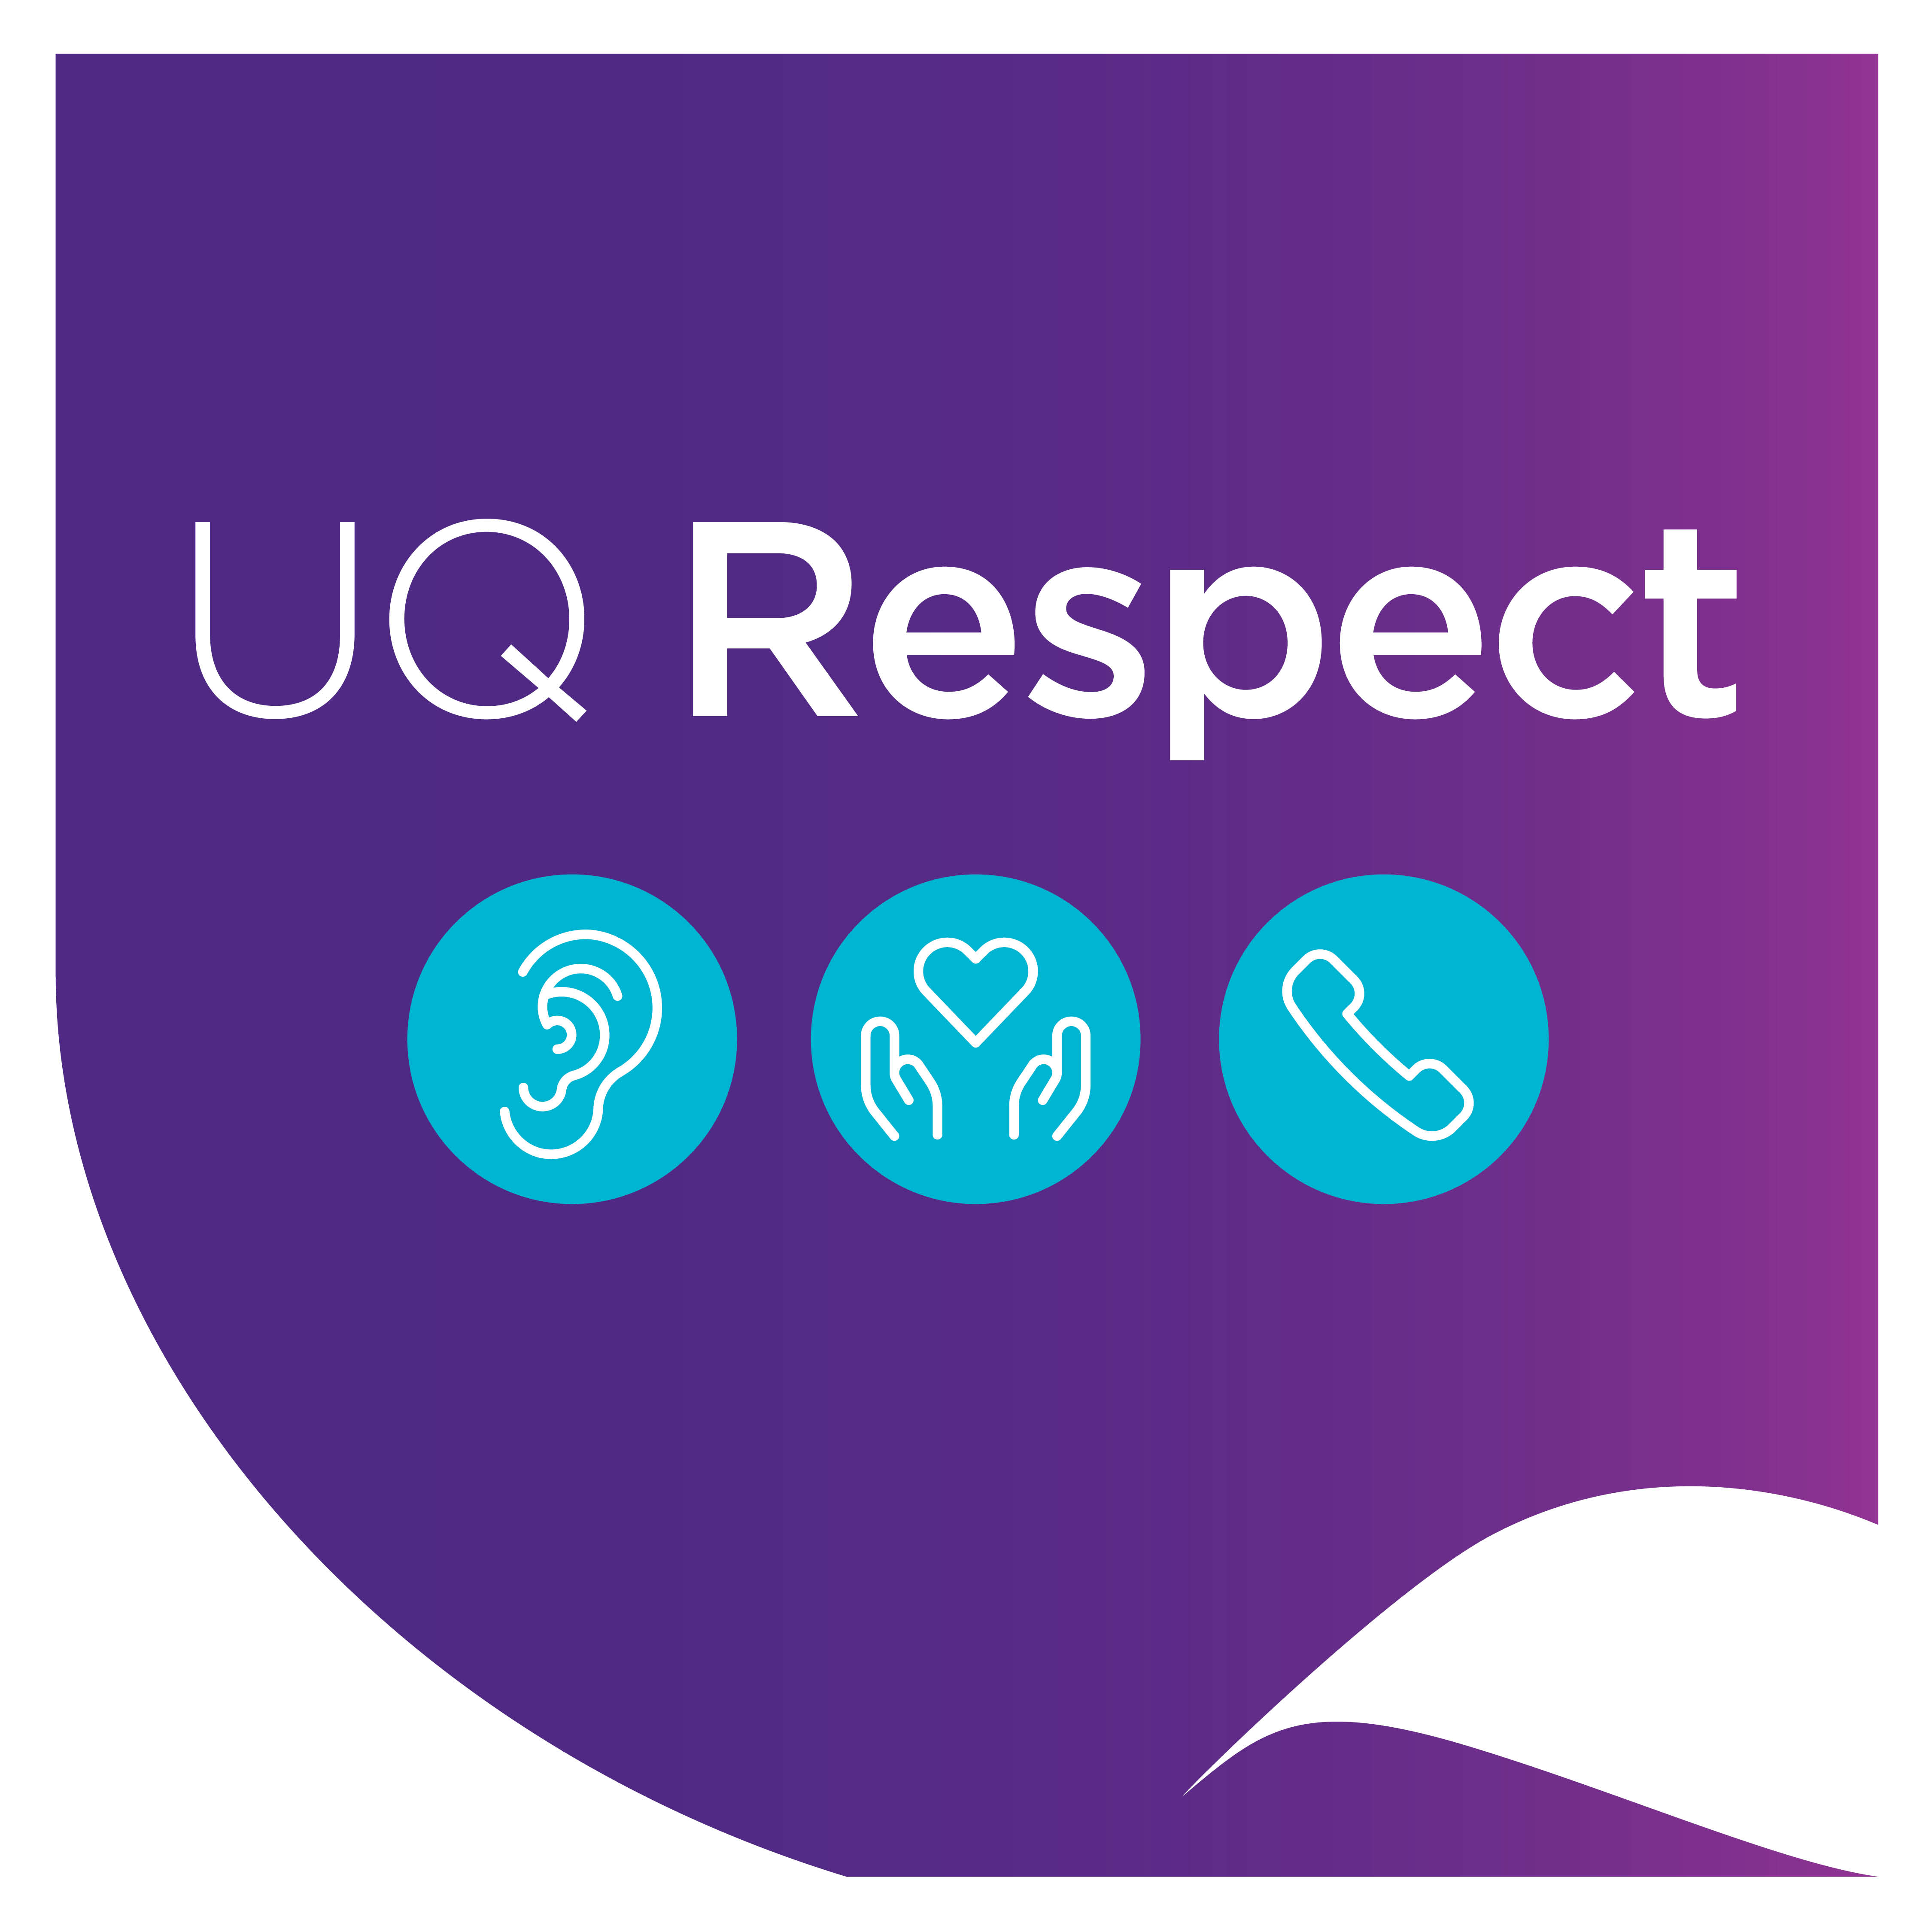 UQ Respect